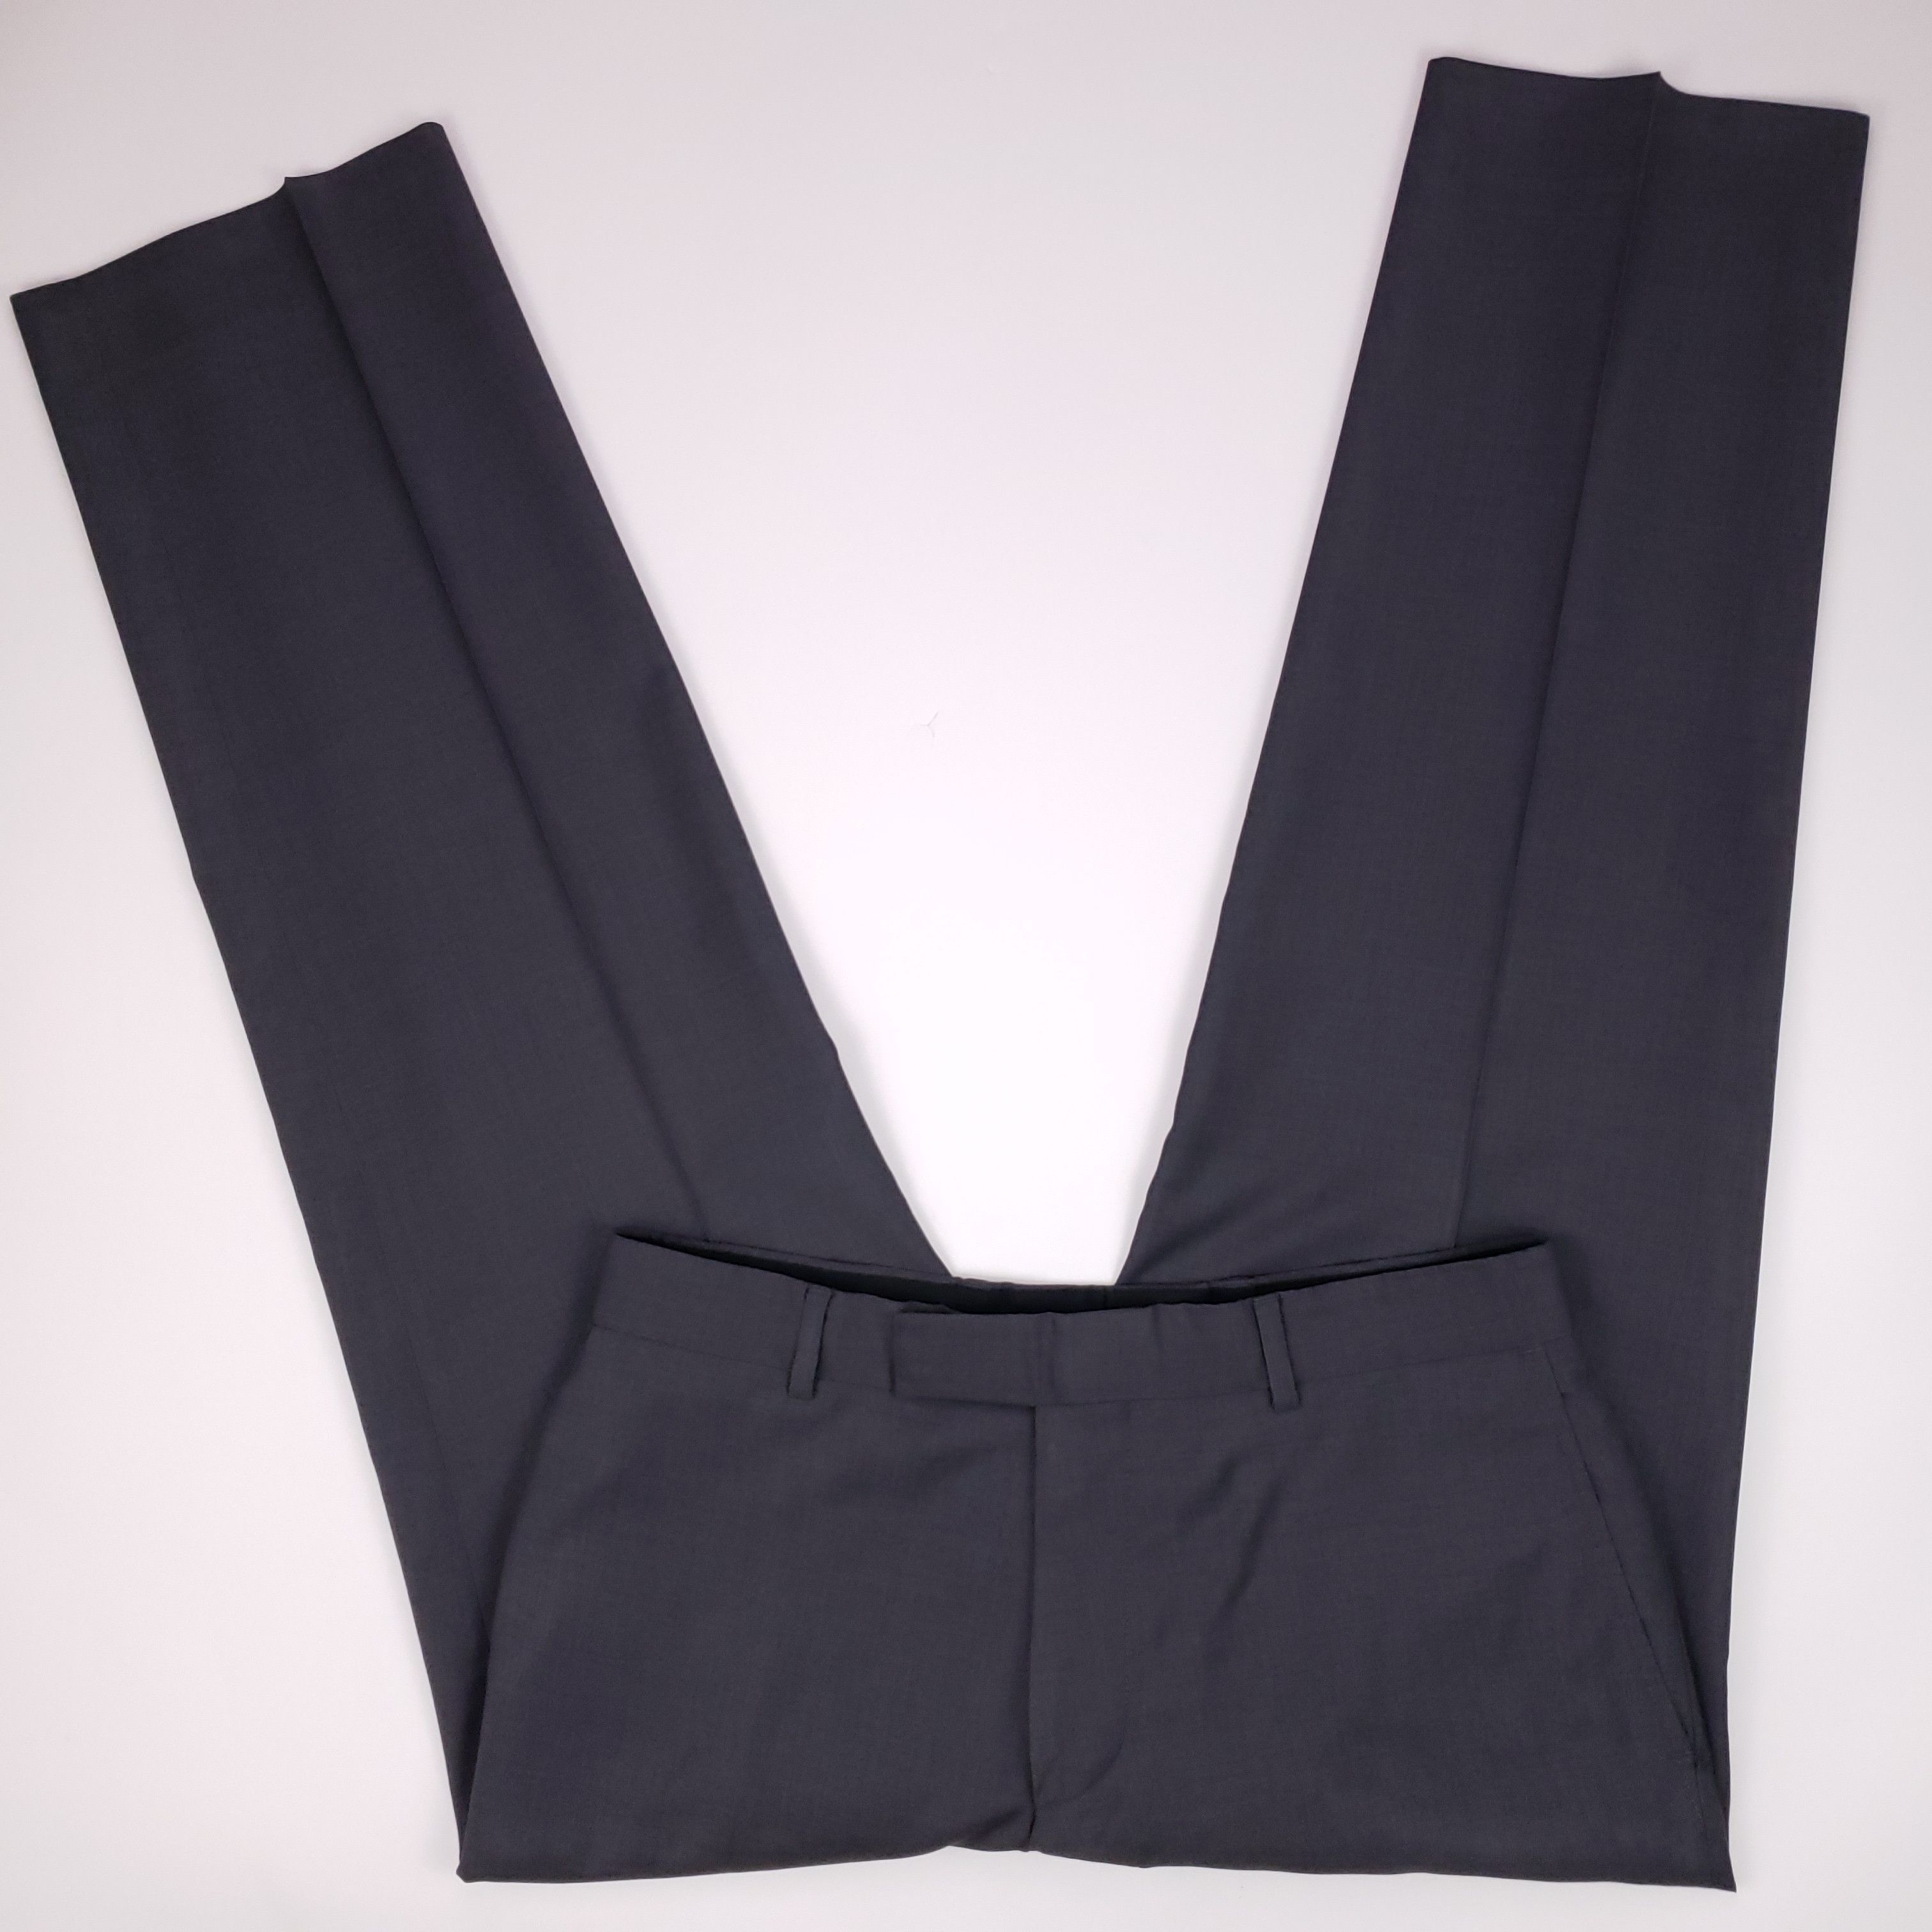 Hugo Boss Hugo Boss James Brown Pants 32x30 Gray Charcoal Wool Cashme Size US 32 / EU 48 - 2 Preview